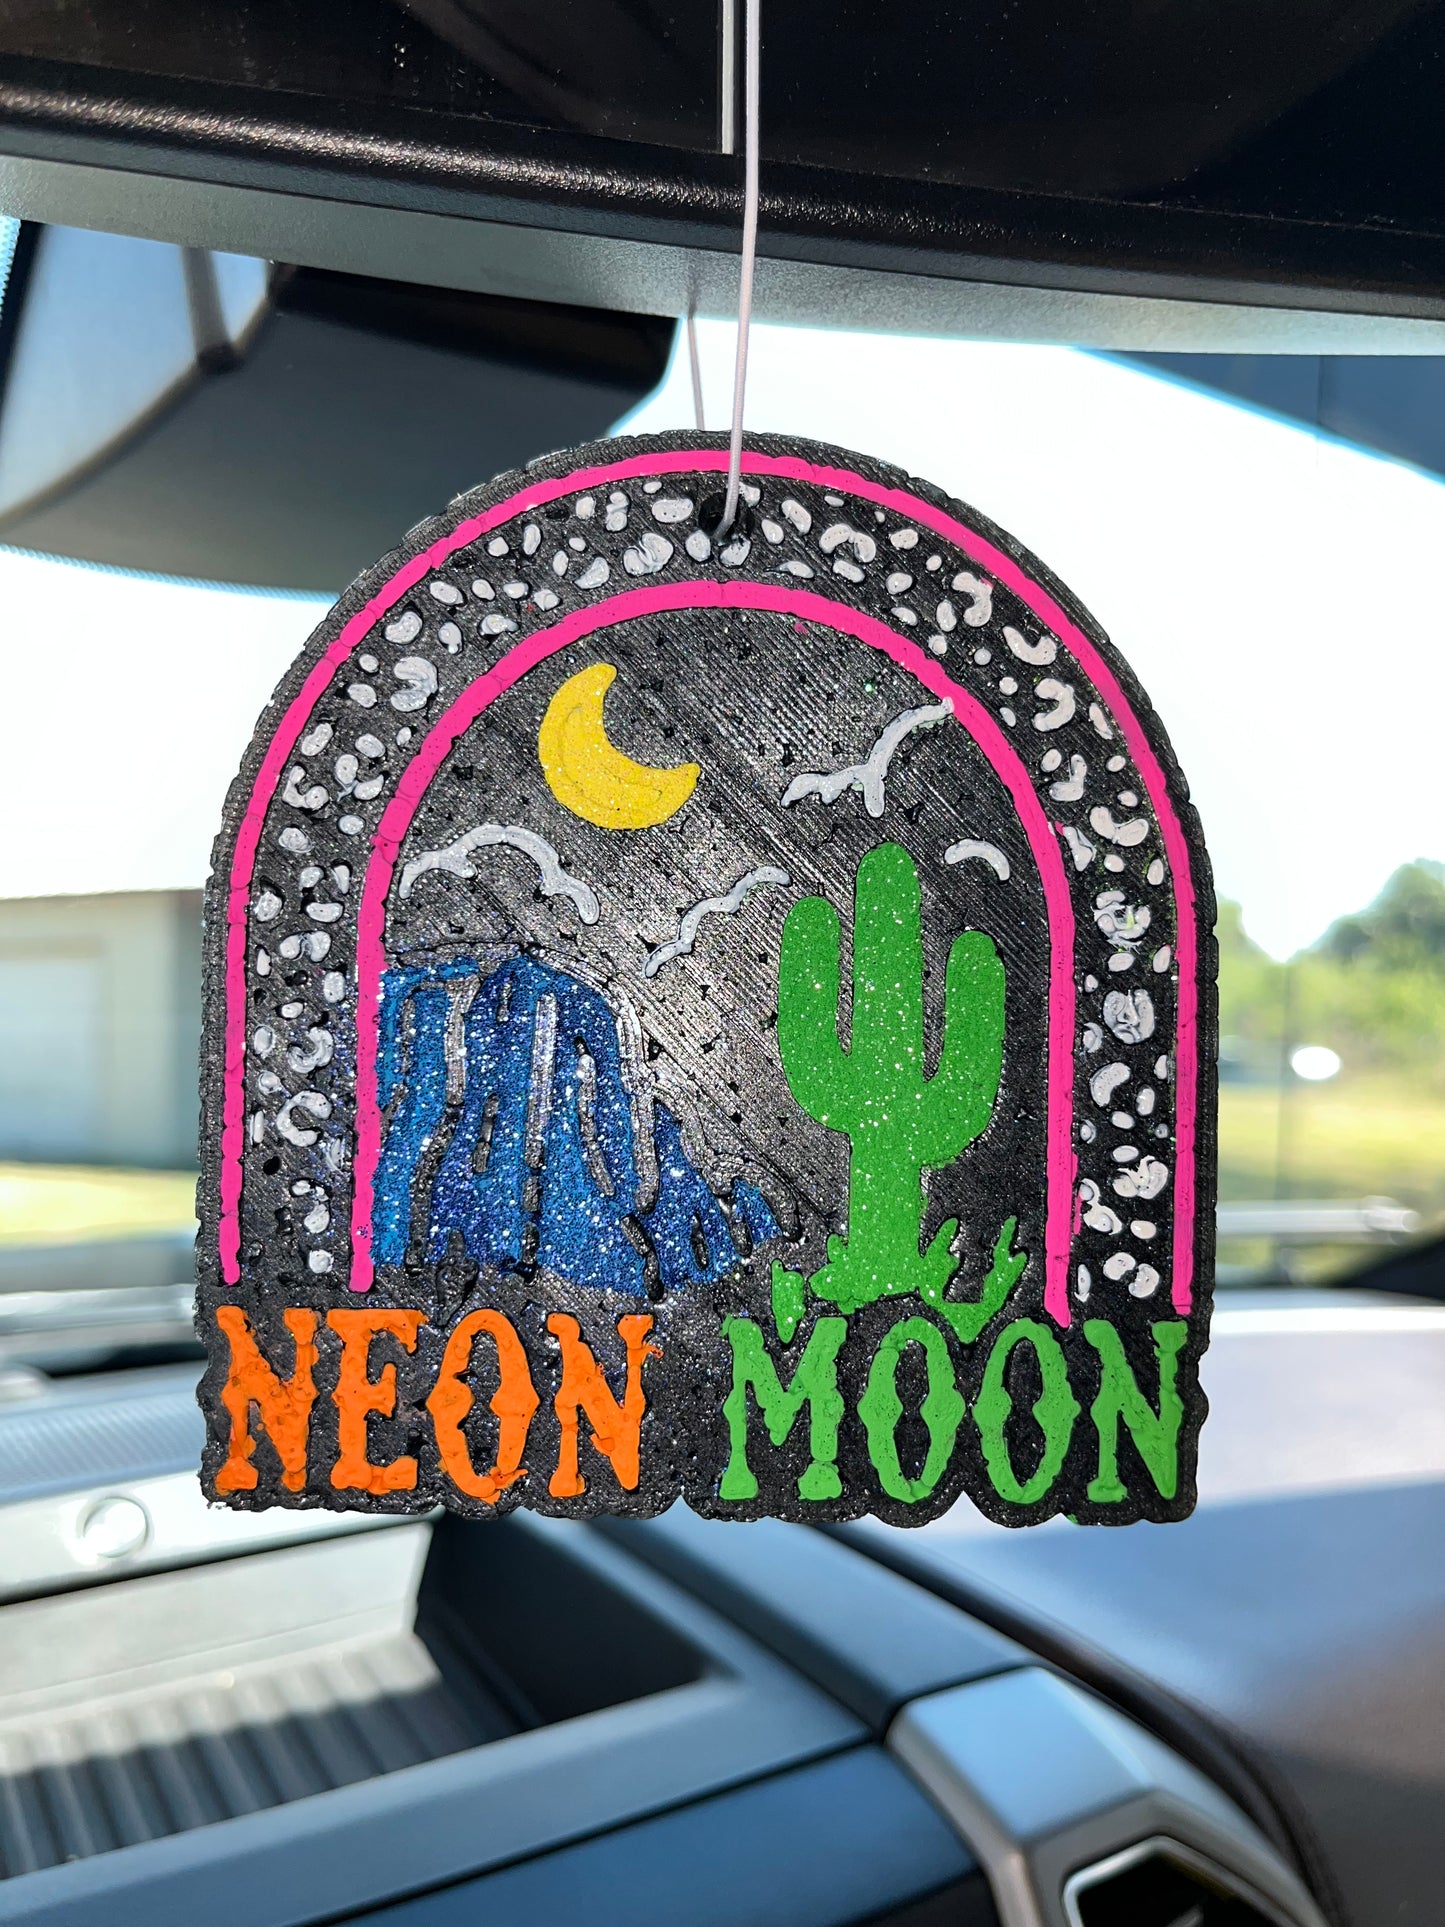 The Neon Moon Freshie